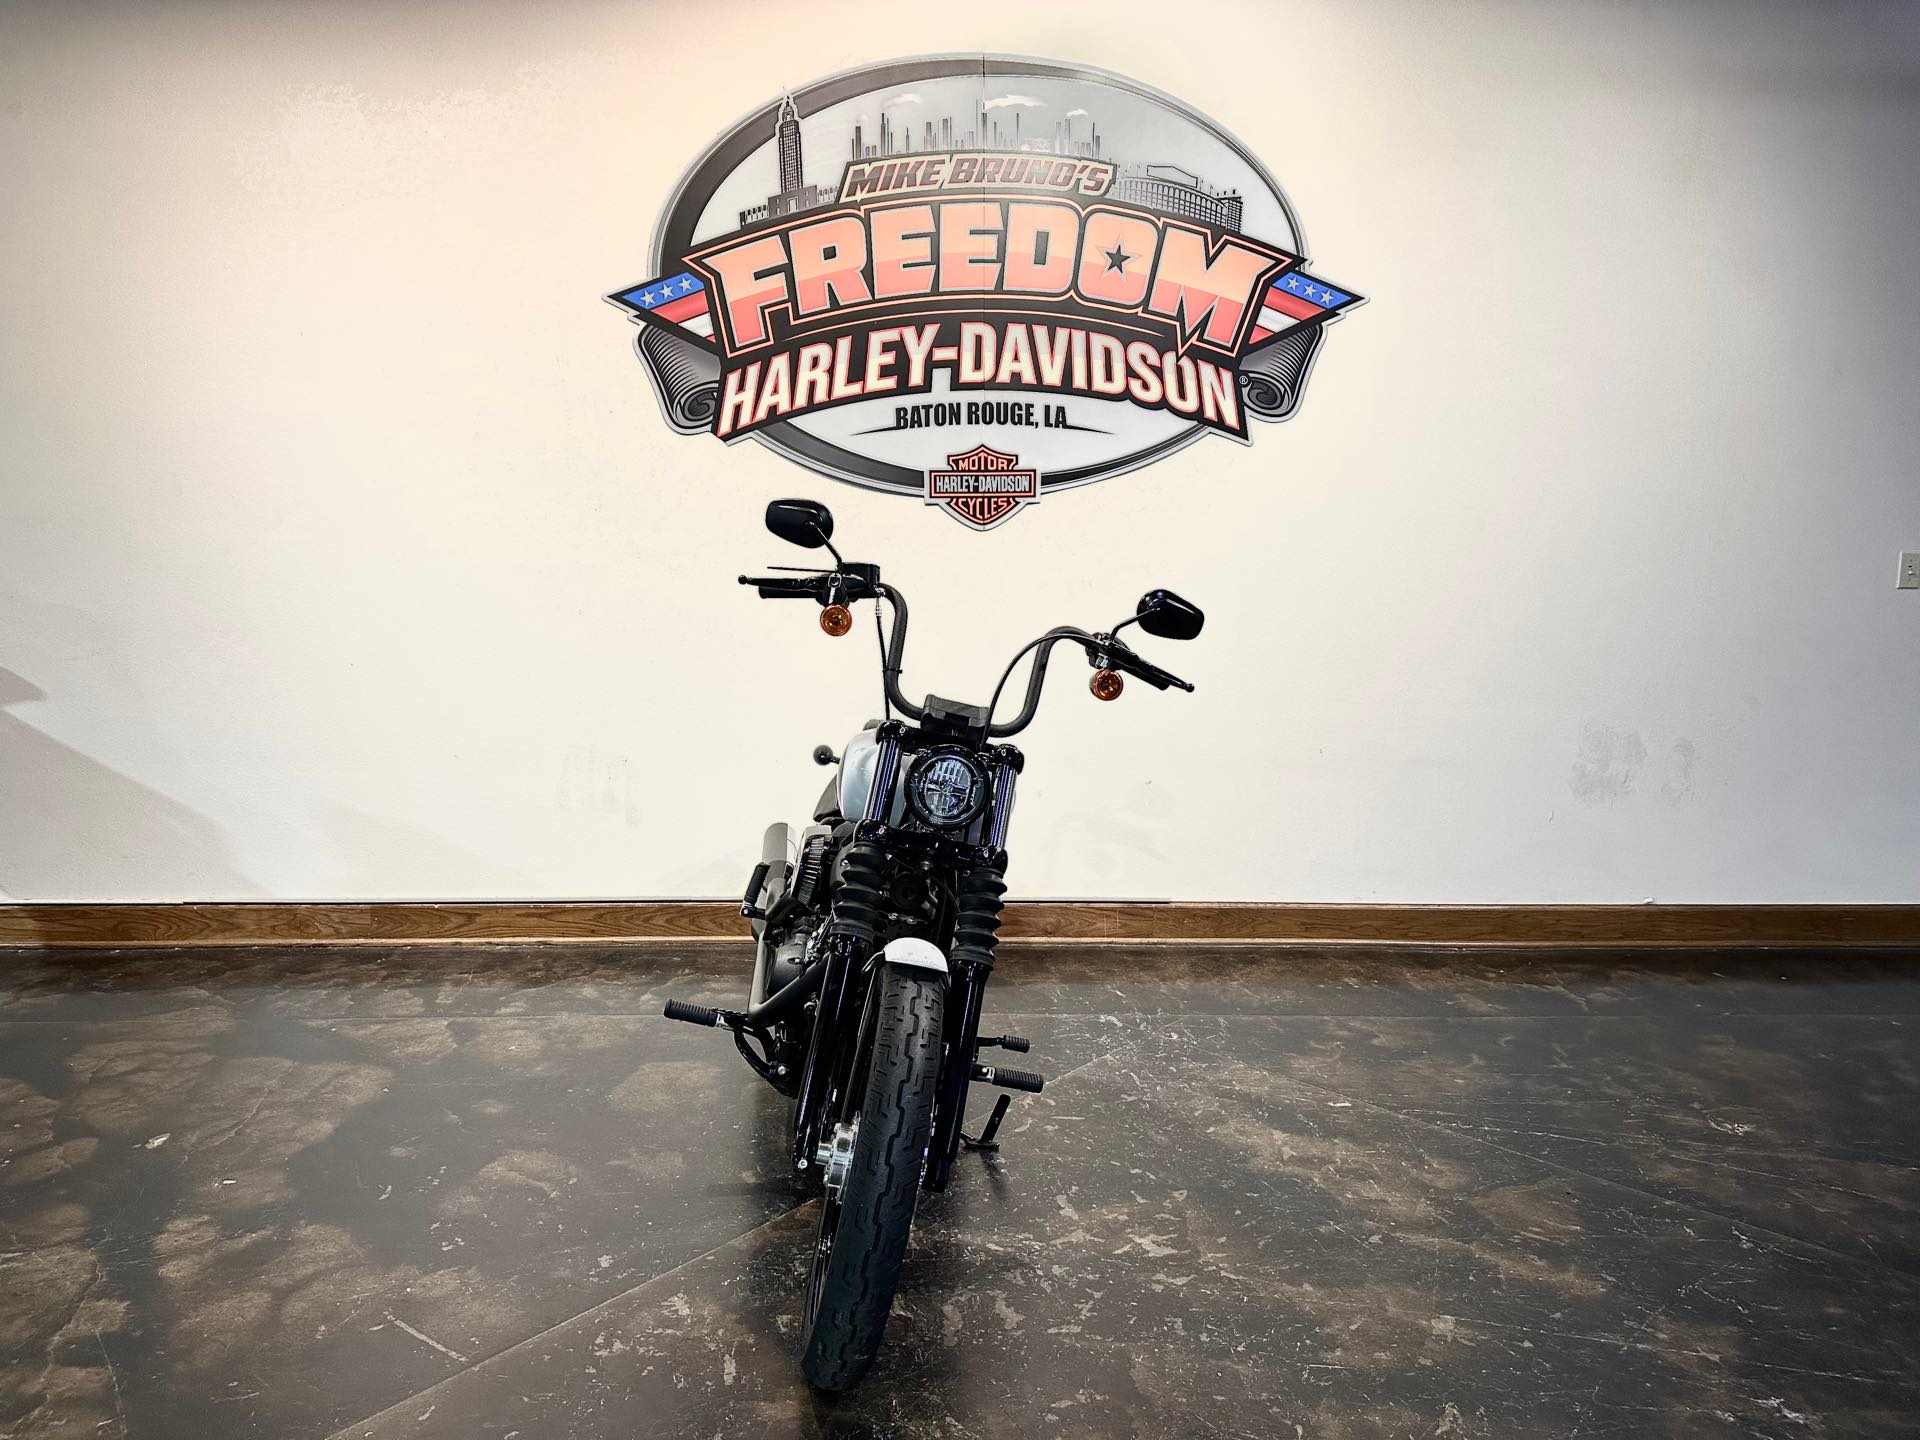 2021 Harley-Davidson Street Bob 114 at Mike Bruno's Freedom Harley-Davidson